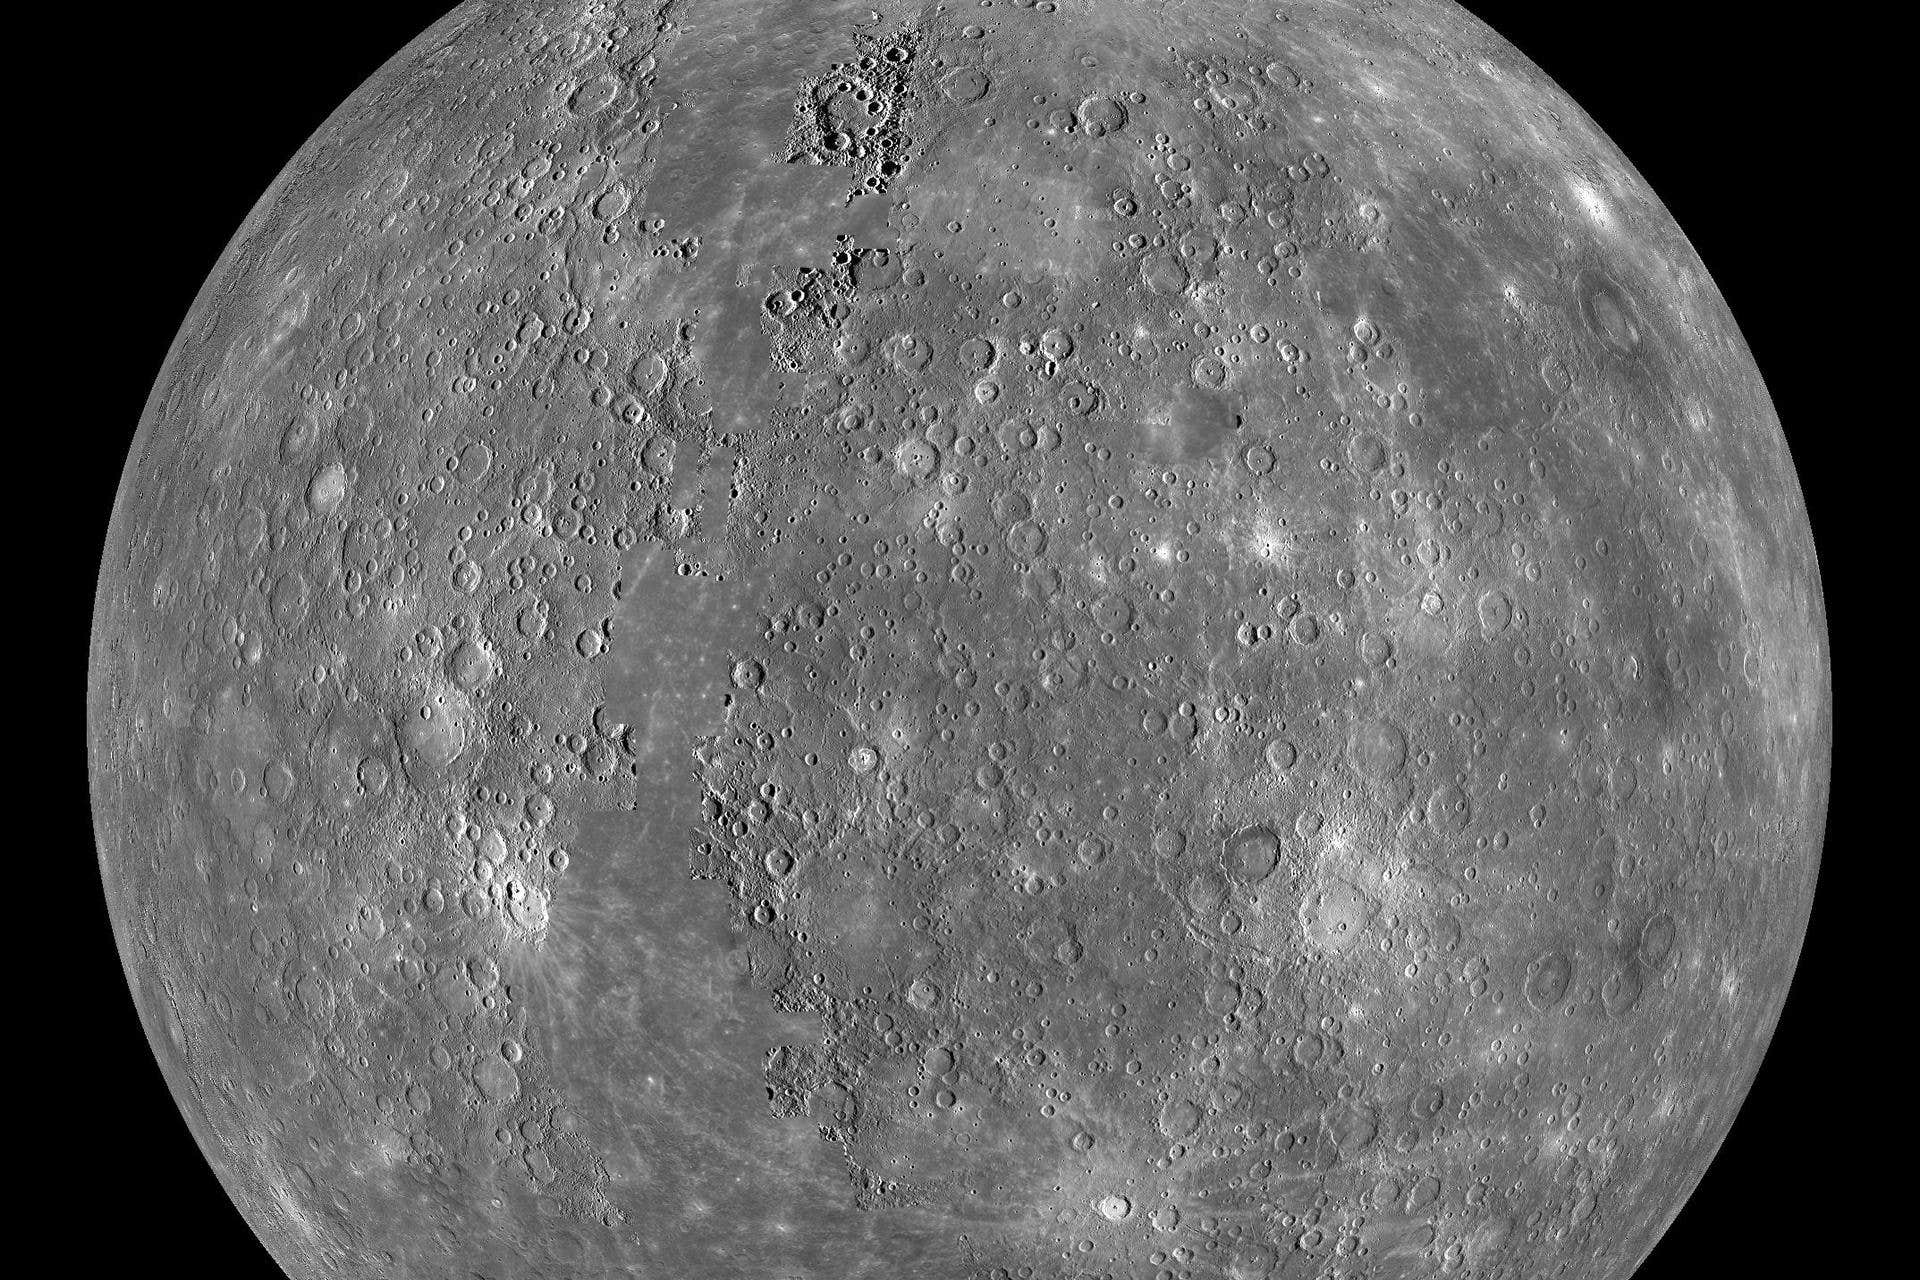 nasa images of mercury